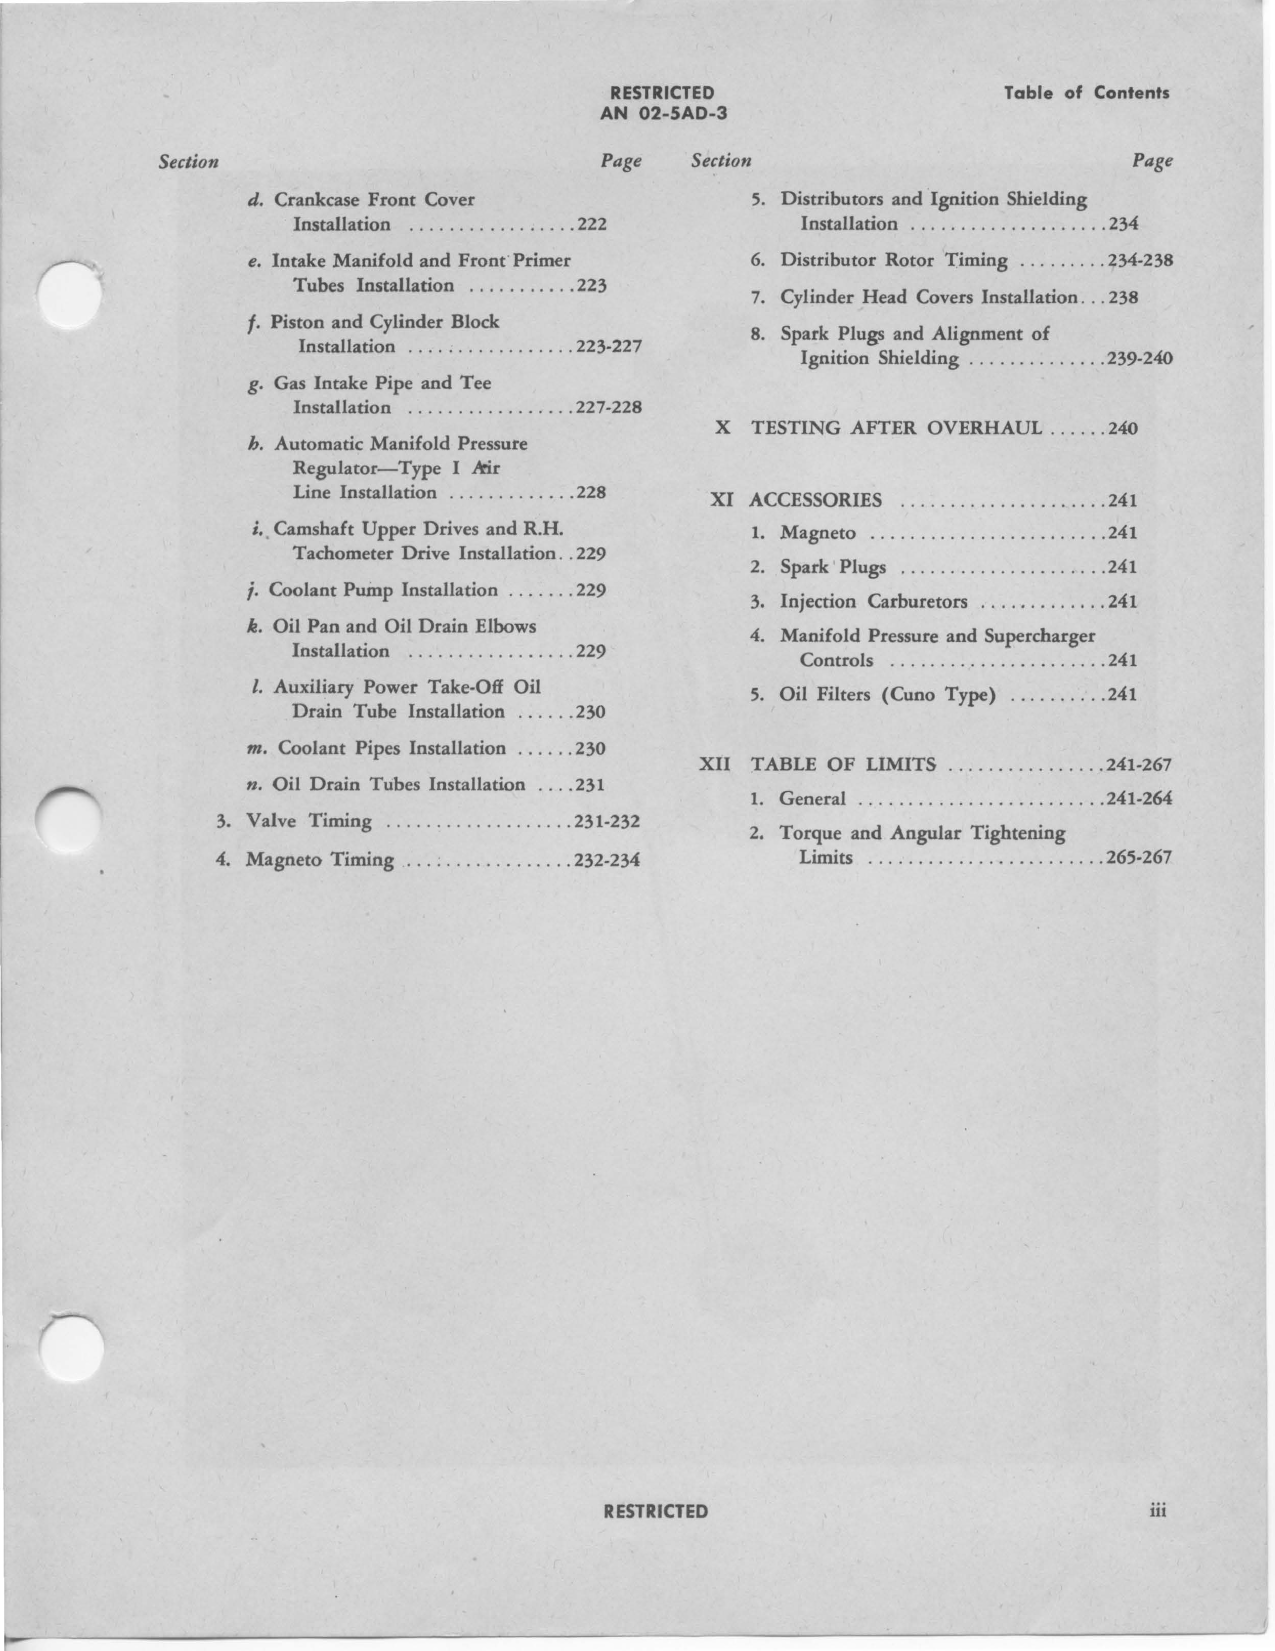 Sample page 5 from AirCorps Library document: Overhaul Instructions for V-1710-35, V-1710-63, V-1710-83, V-1710-85 and V-1710-93